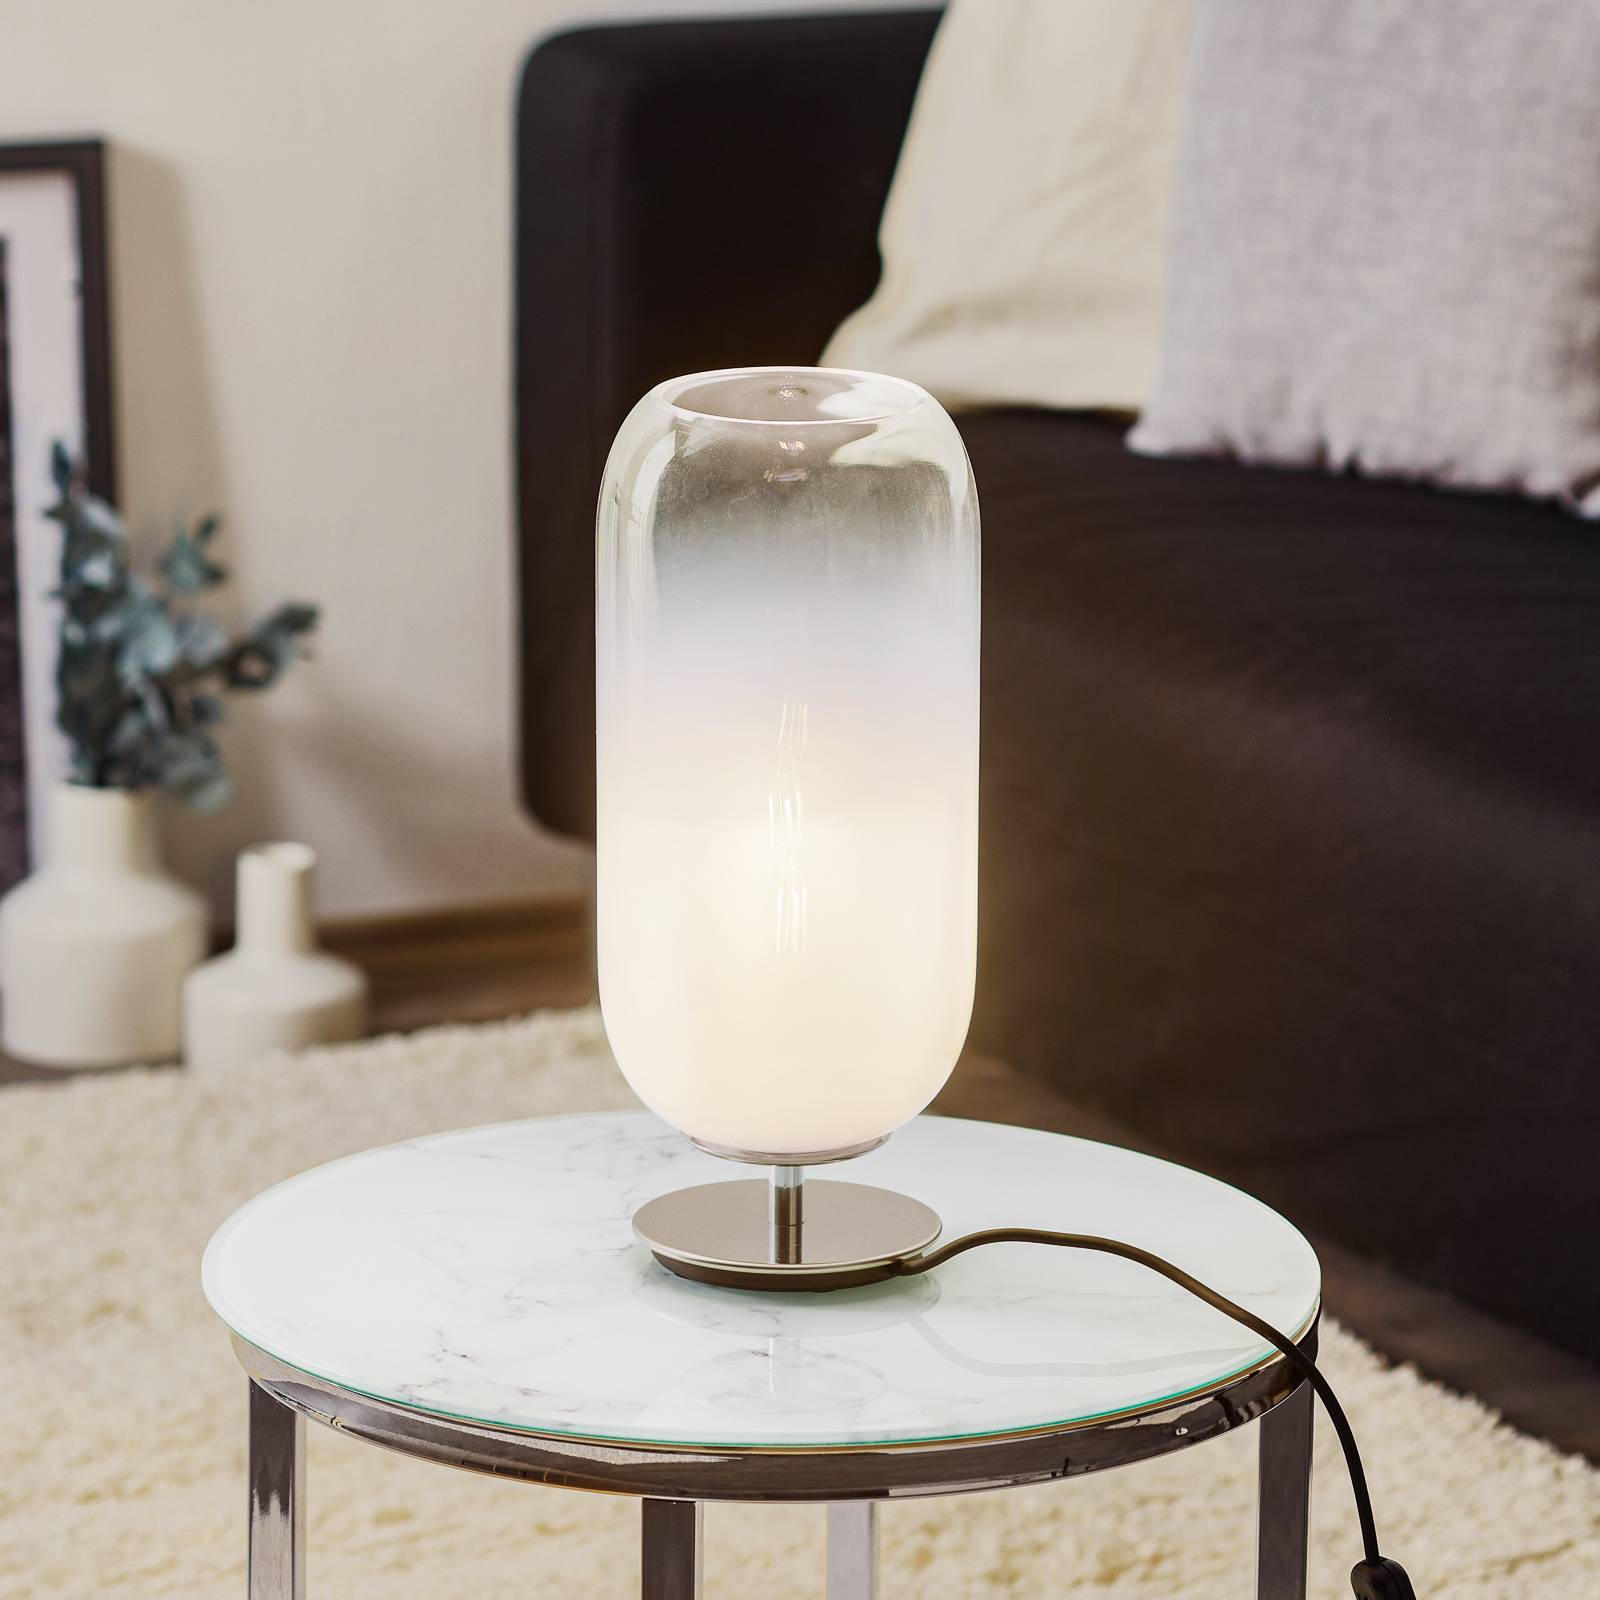 Artemide gpeople mini asztali lámpa fehér/ezüst